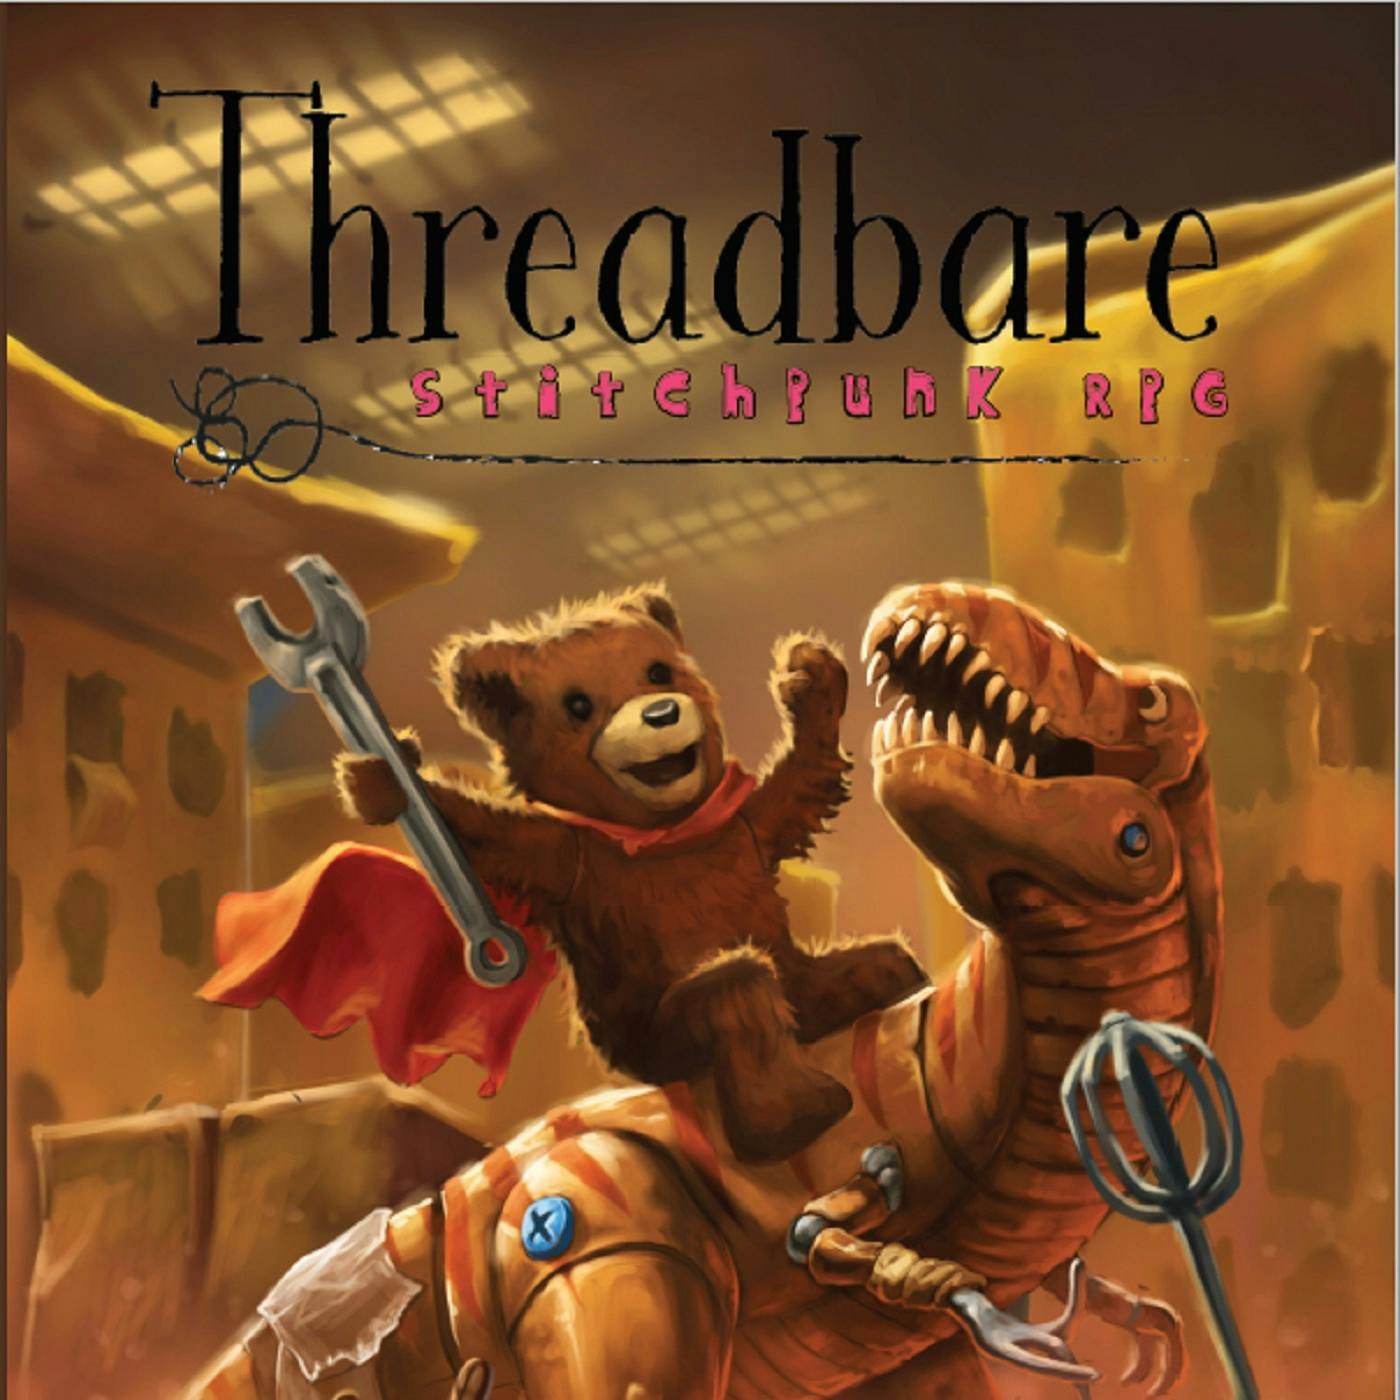 Threadbare RPG - Flight of the Bumblebee